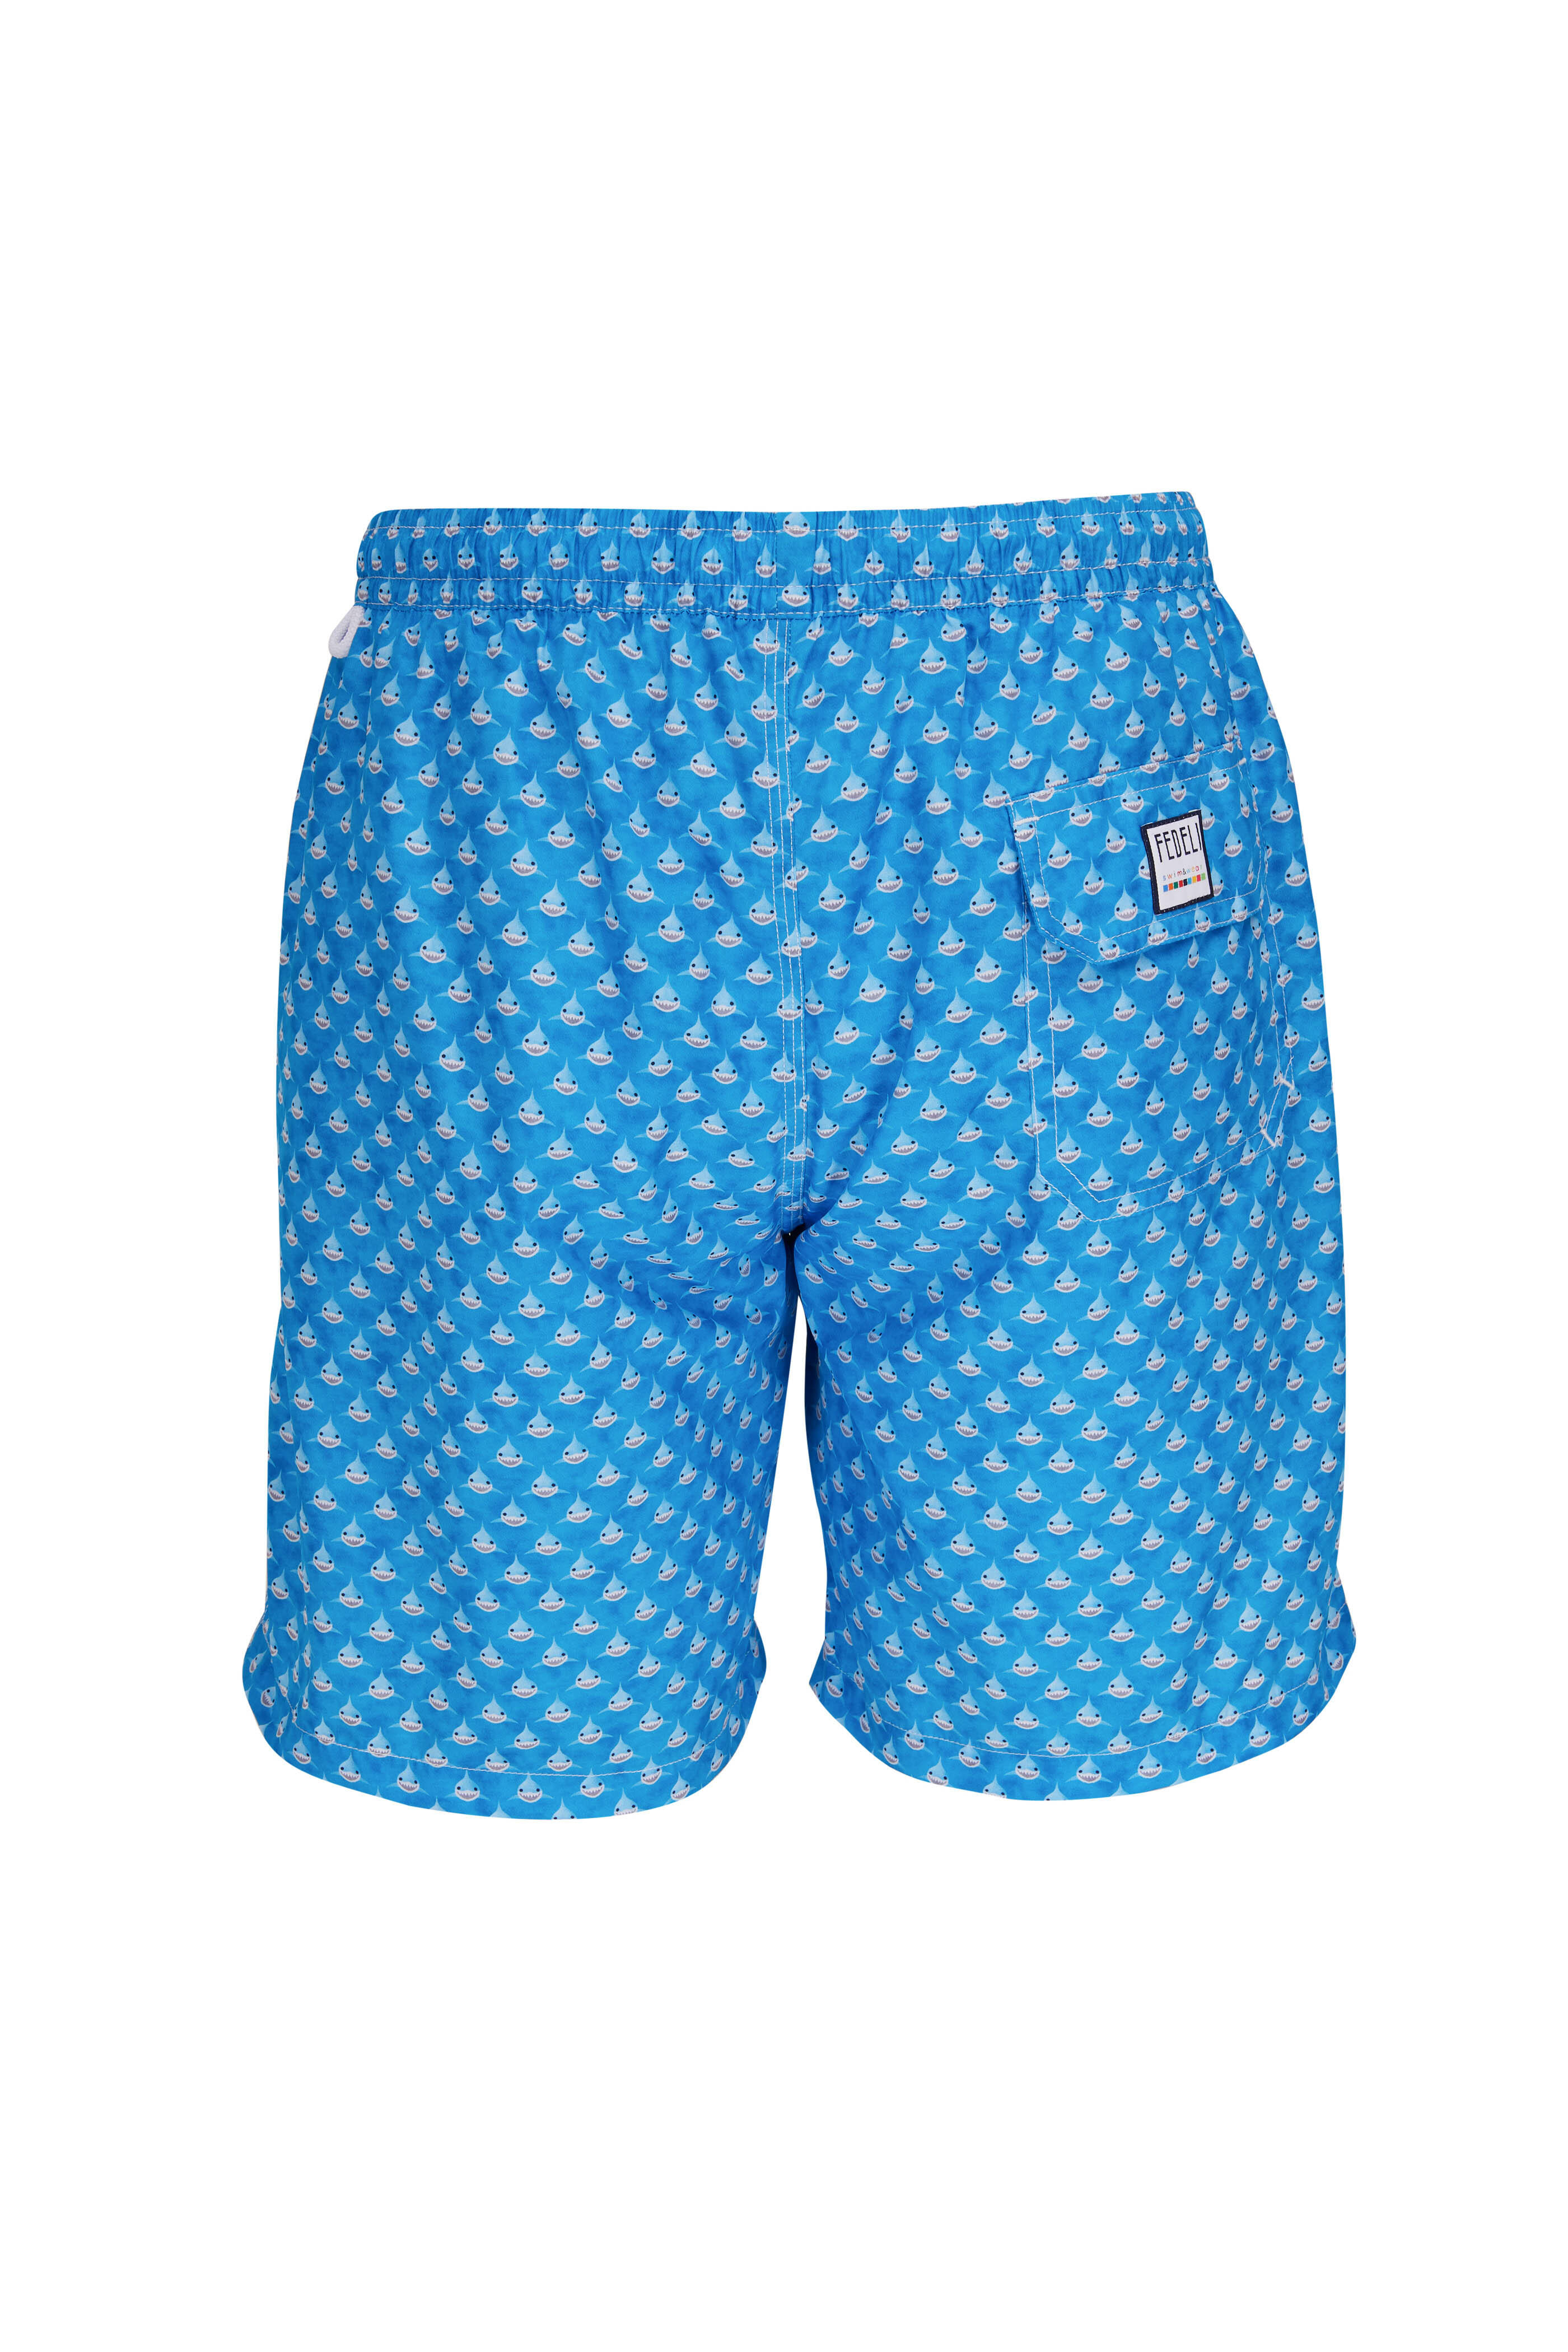 seas stars fantasy print blue Swim Shorts - FEDELI - Russocapri